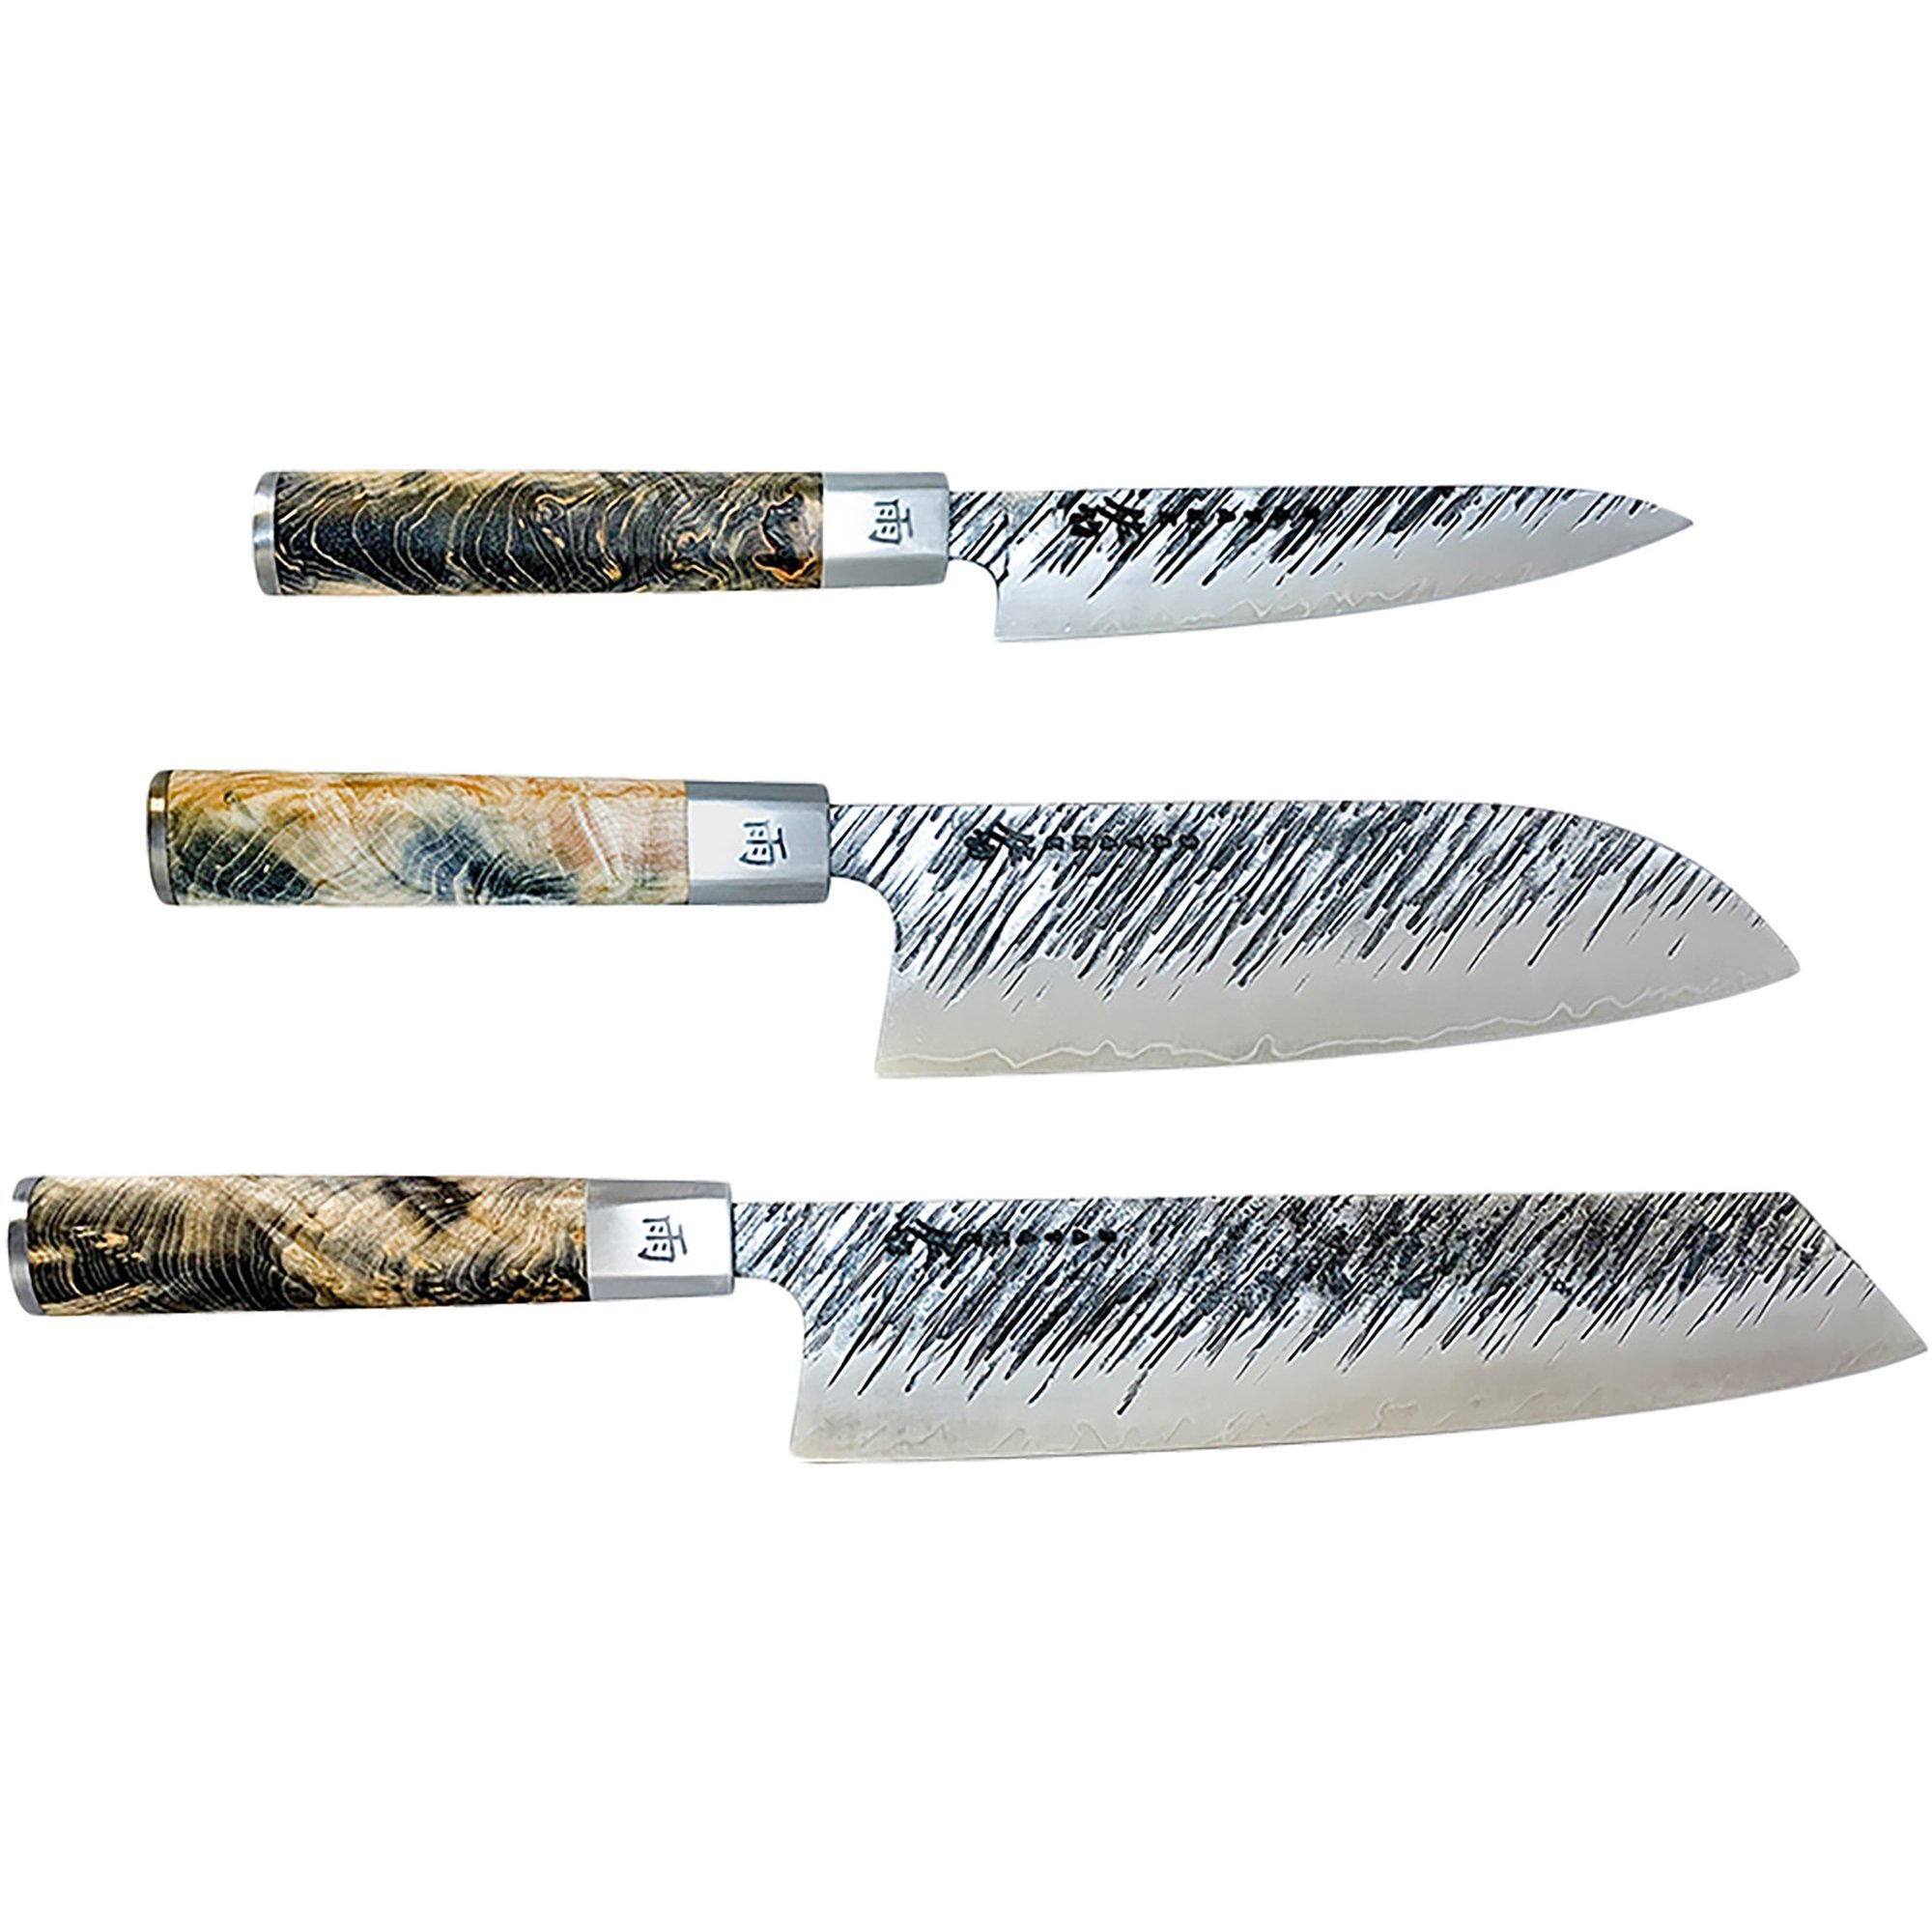 #2 - Satake Ame knivsæt i 3 dele